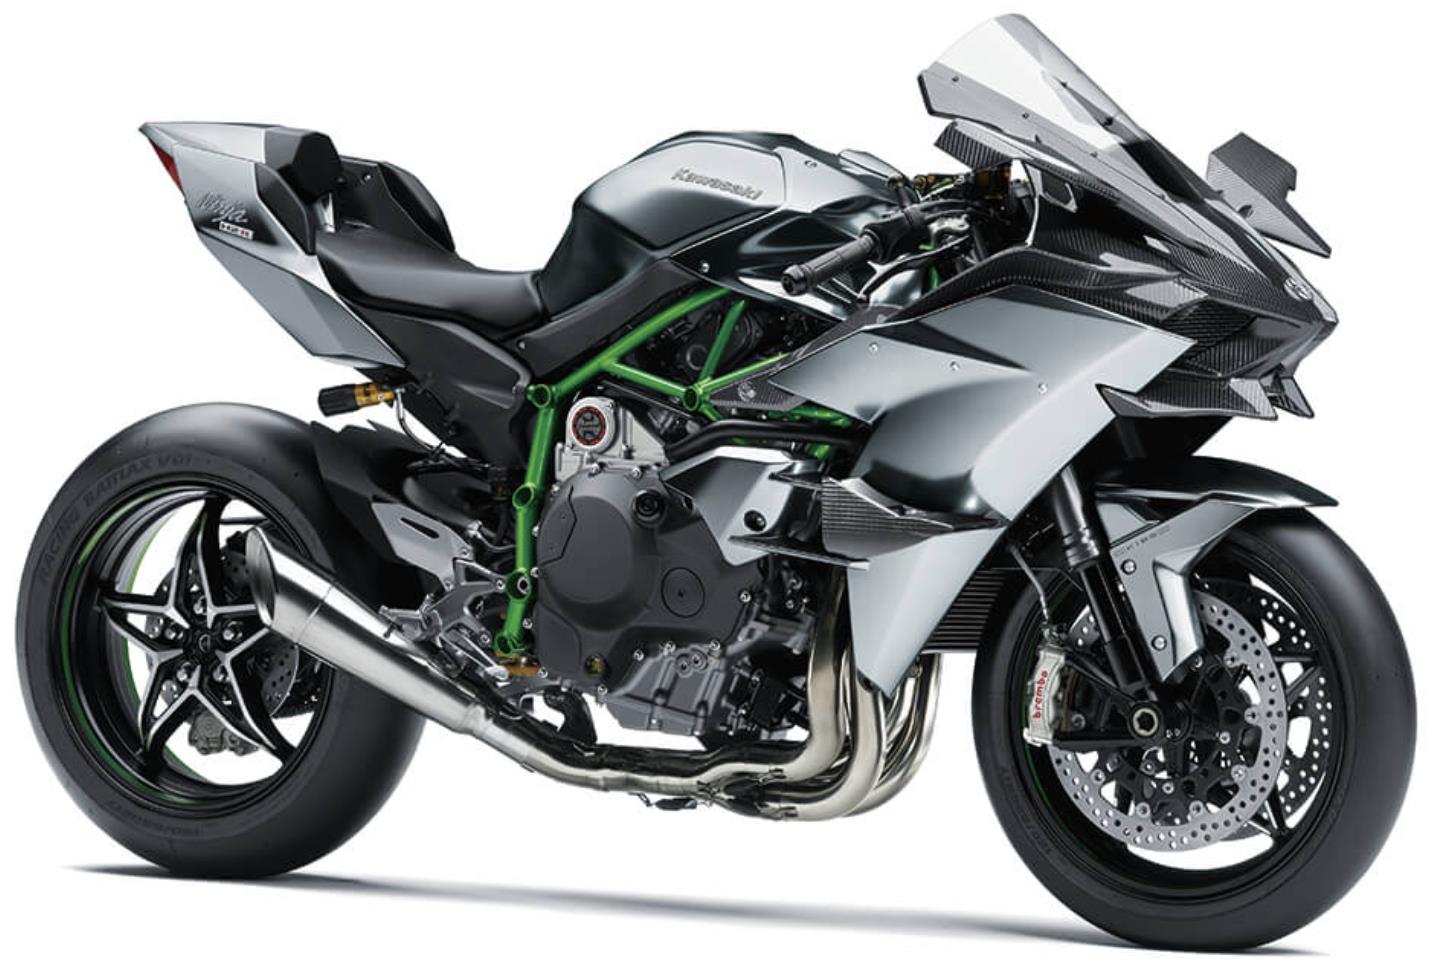  Kawasaki  Ninja H2 Price Specs Review Pics Mileage in 